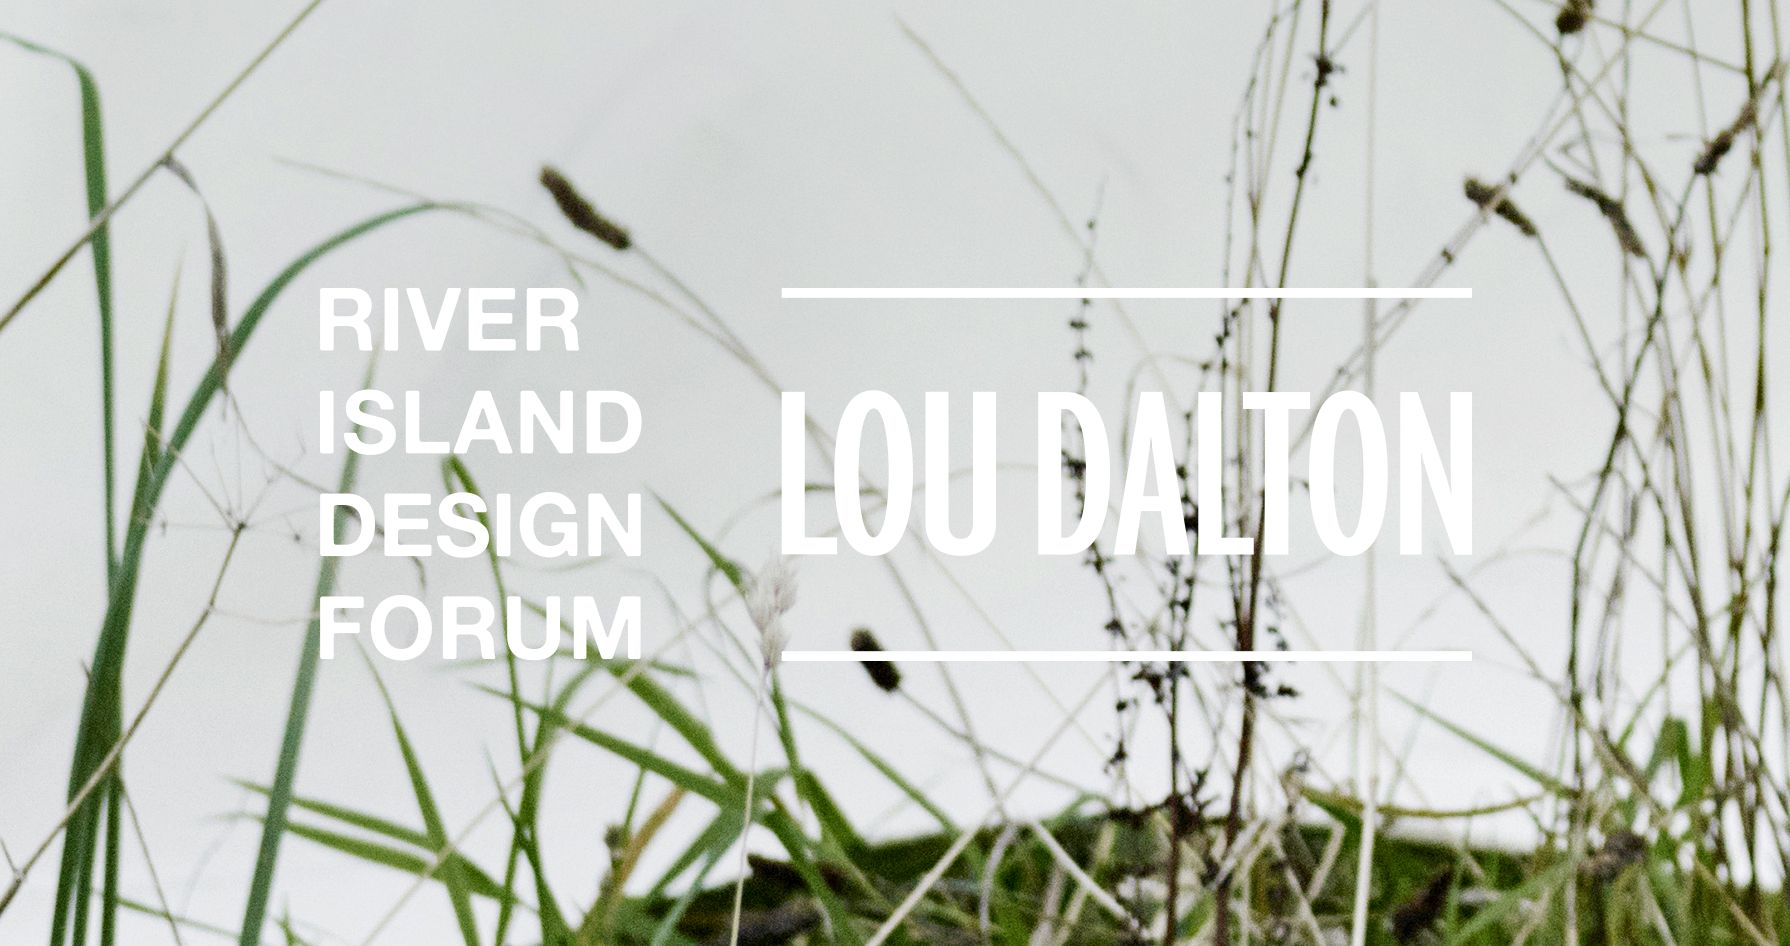 Lou Dalton For River Island: Design Forum 2016